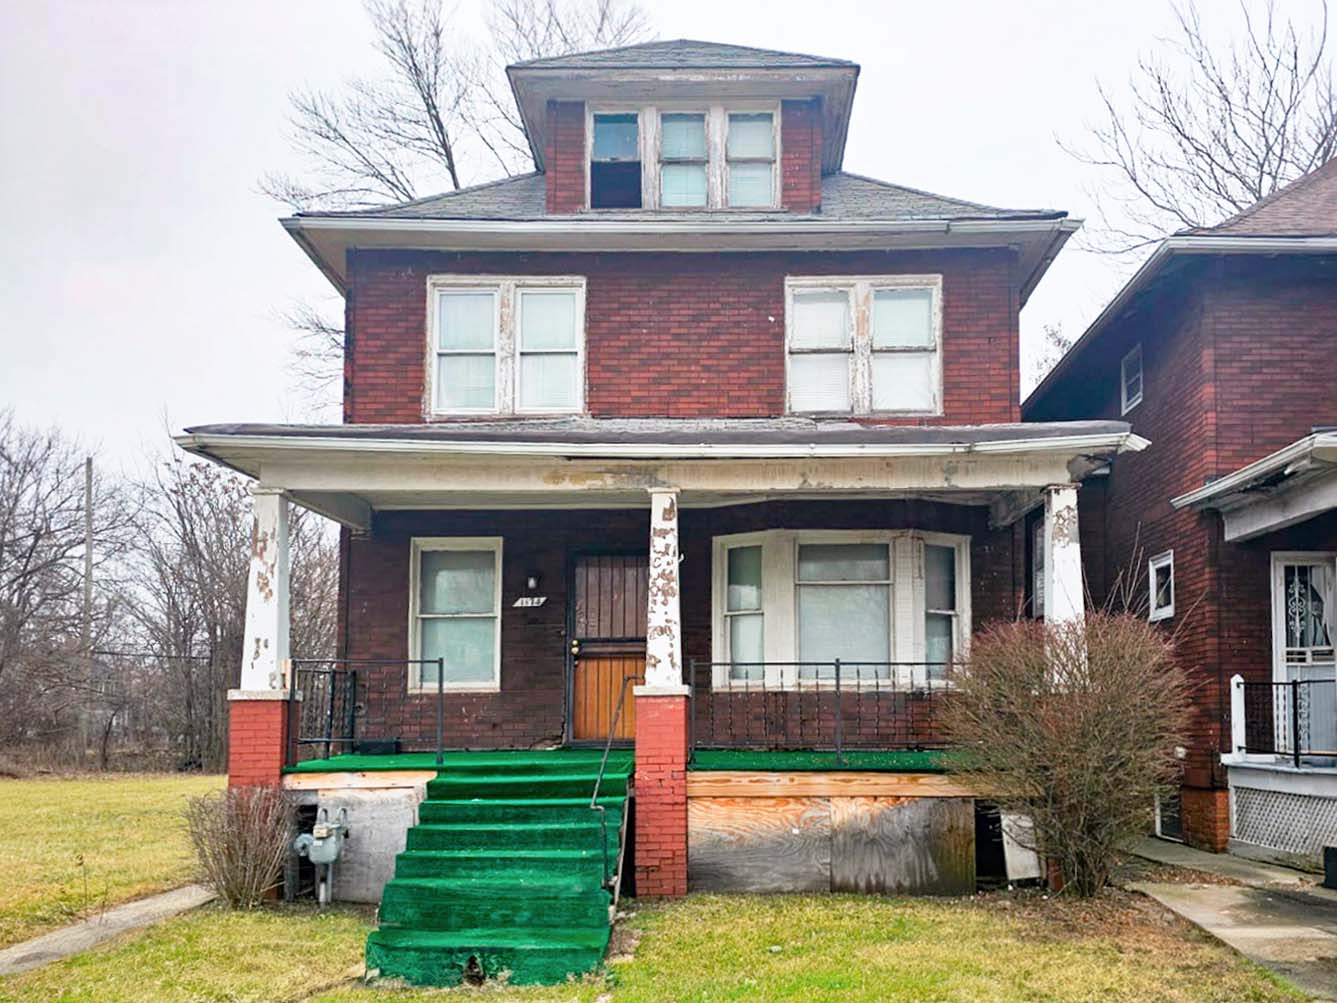 Single Family Home, USA, Detroit, MI 48123, RealT